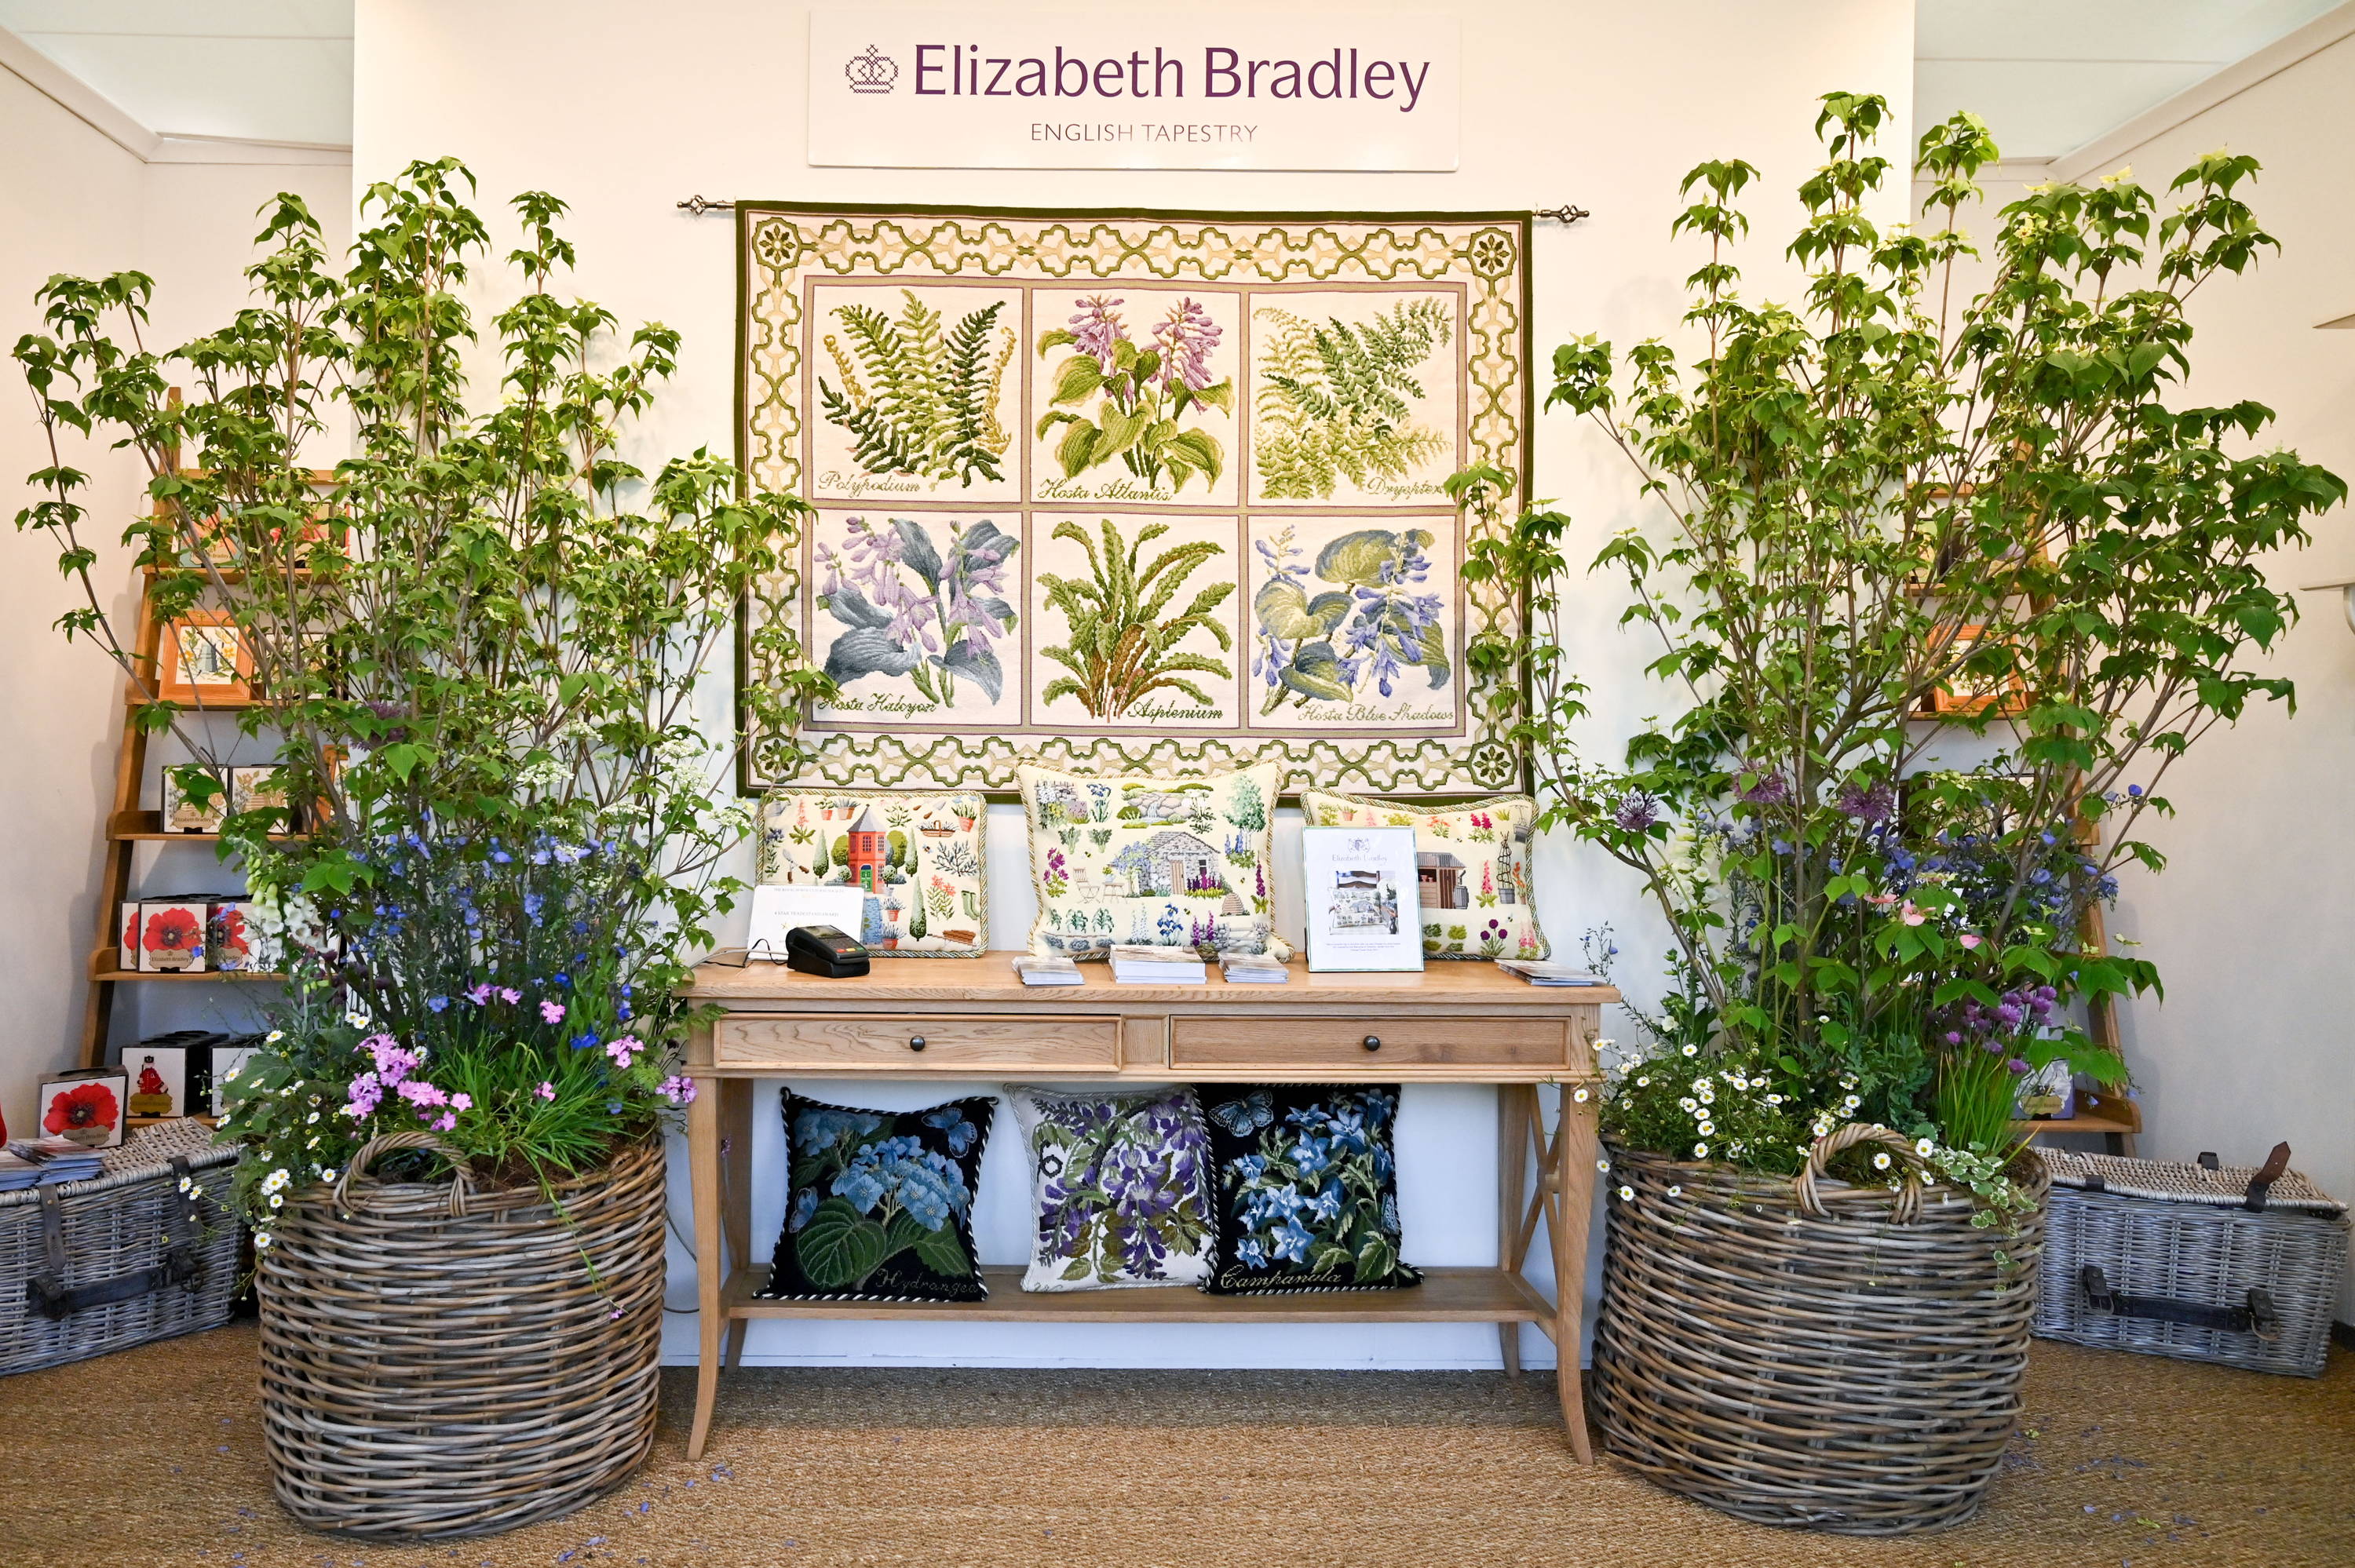 Elizabeth Bradley needlepoint display at 2019 Chelsea Flower Show booth